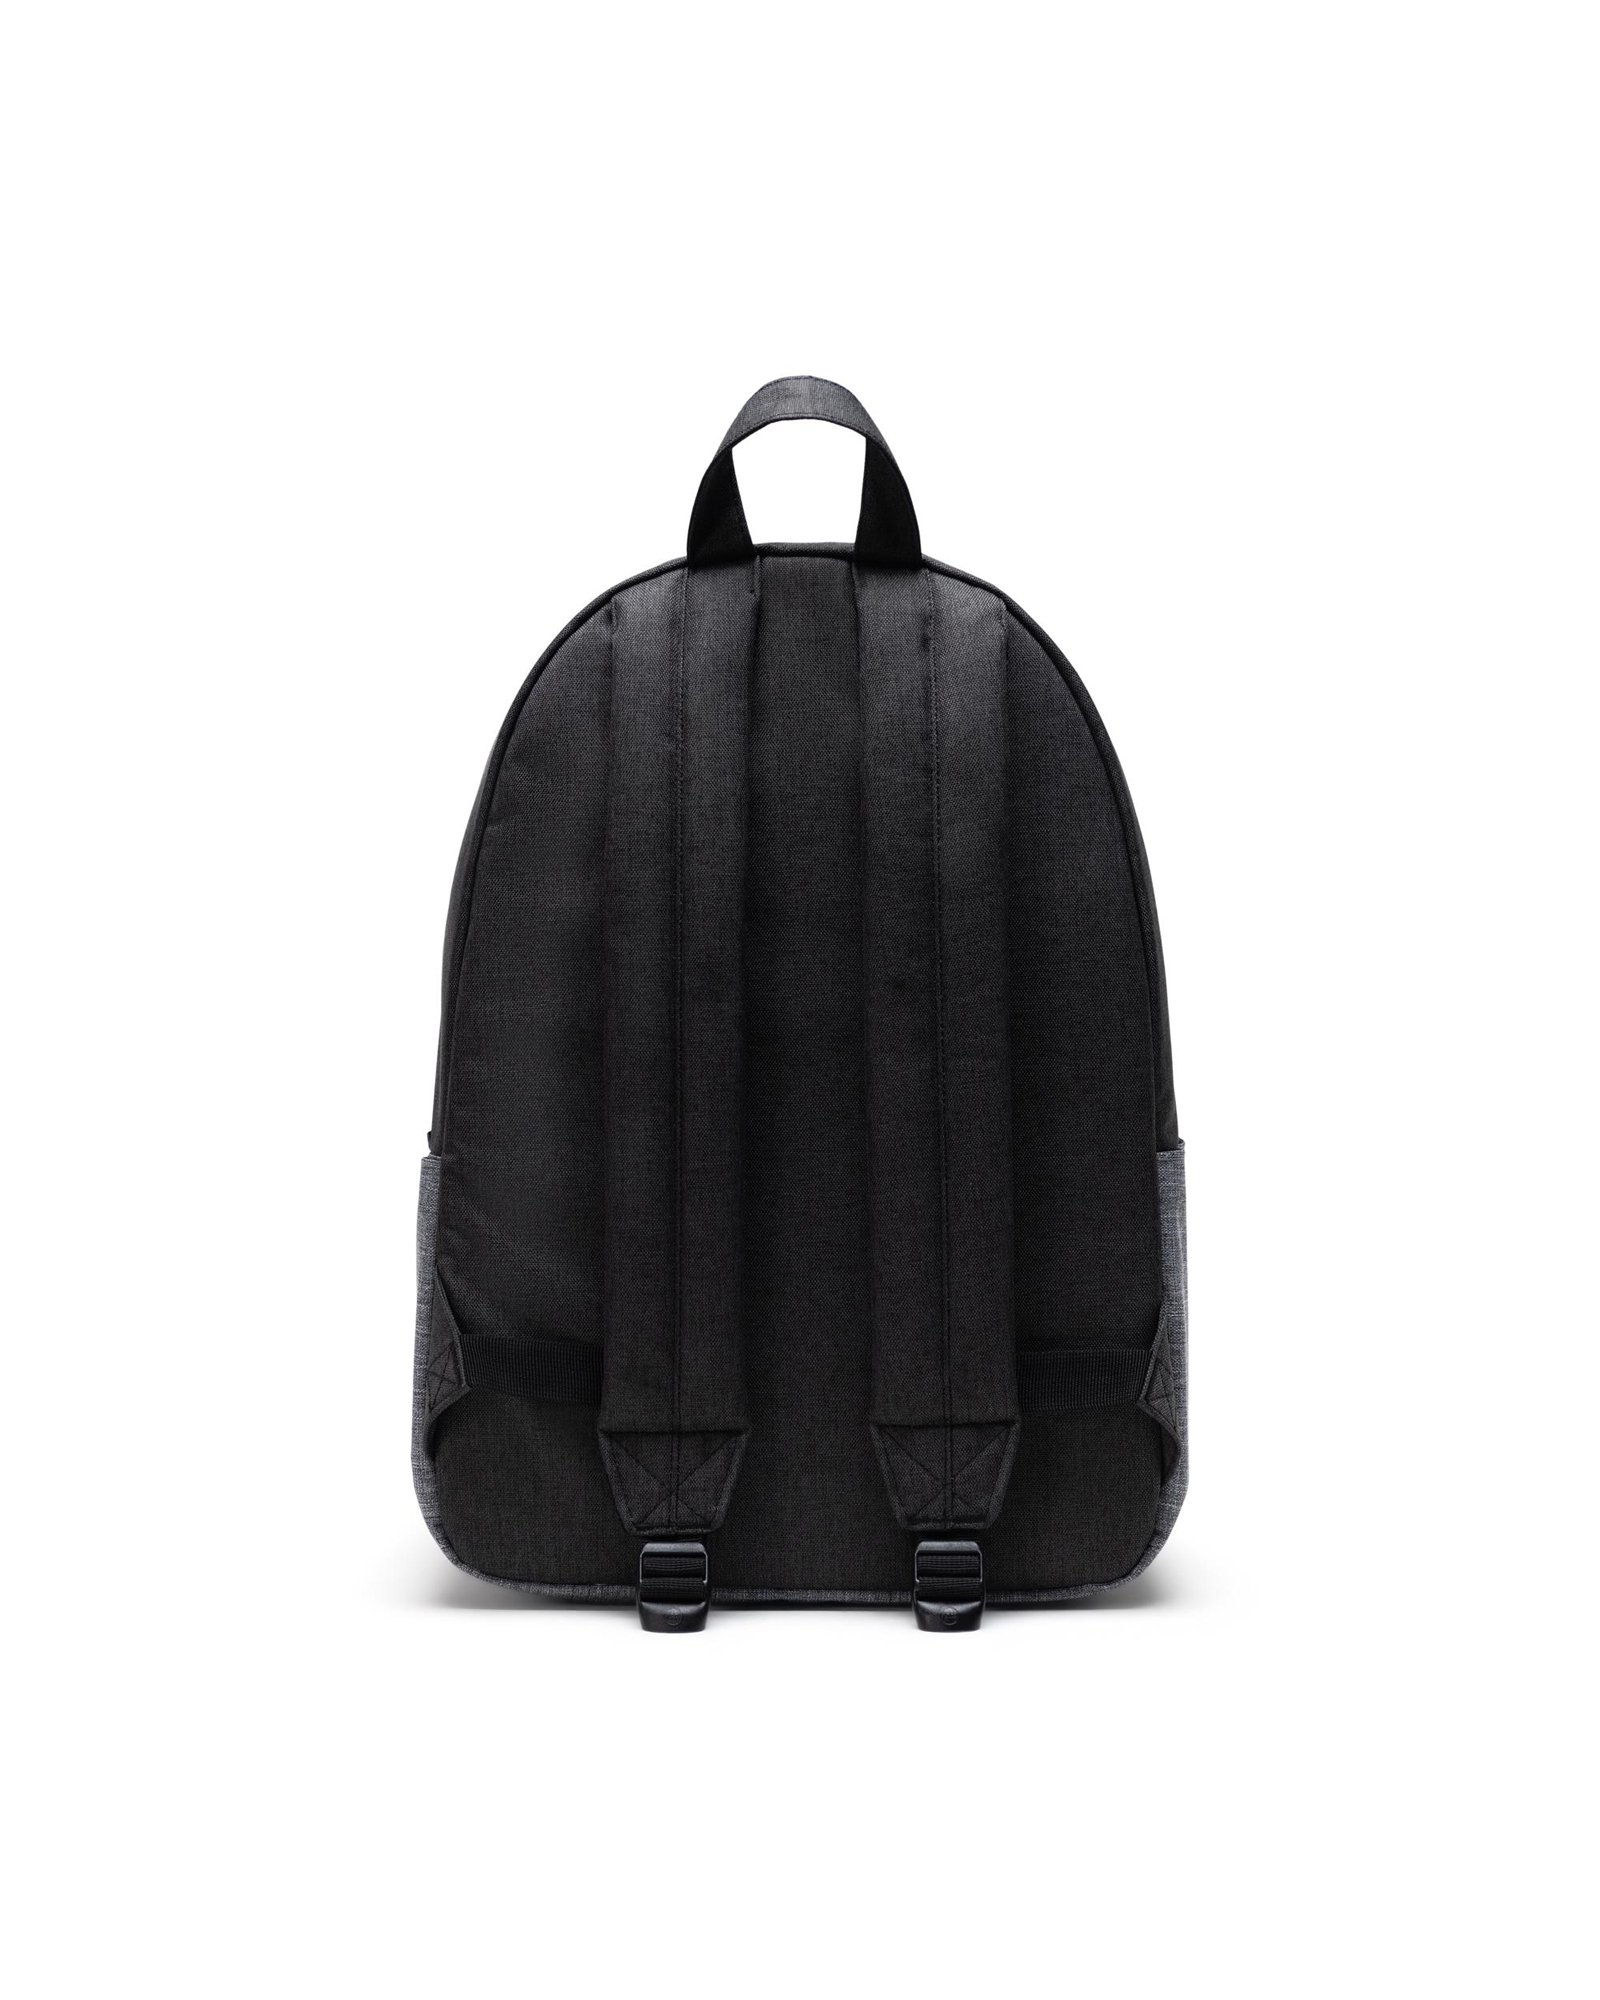 Herschel Classic™ XL Backpack